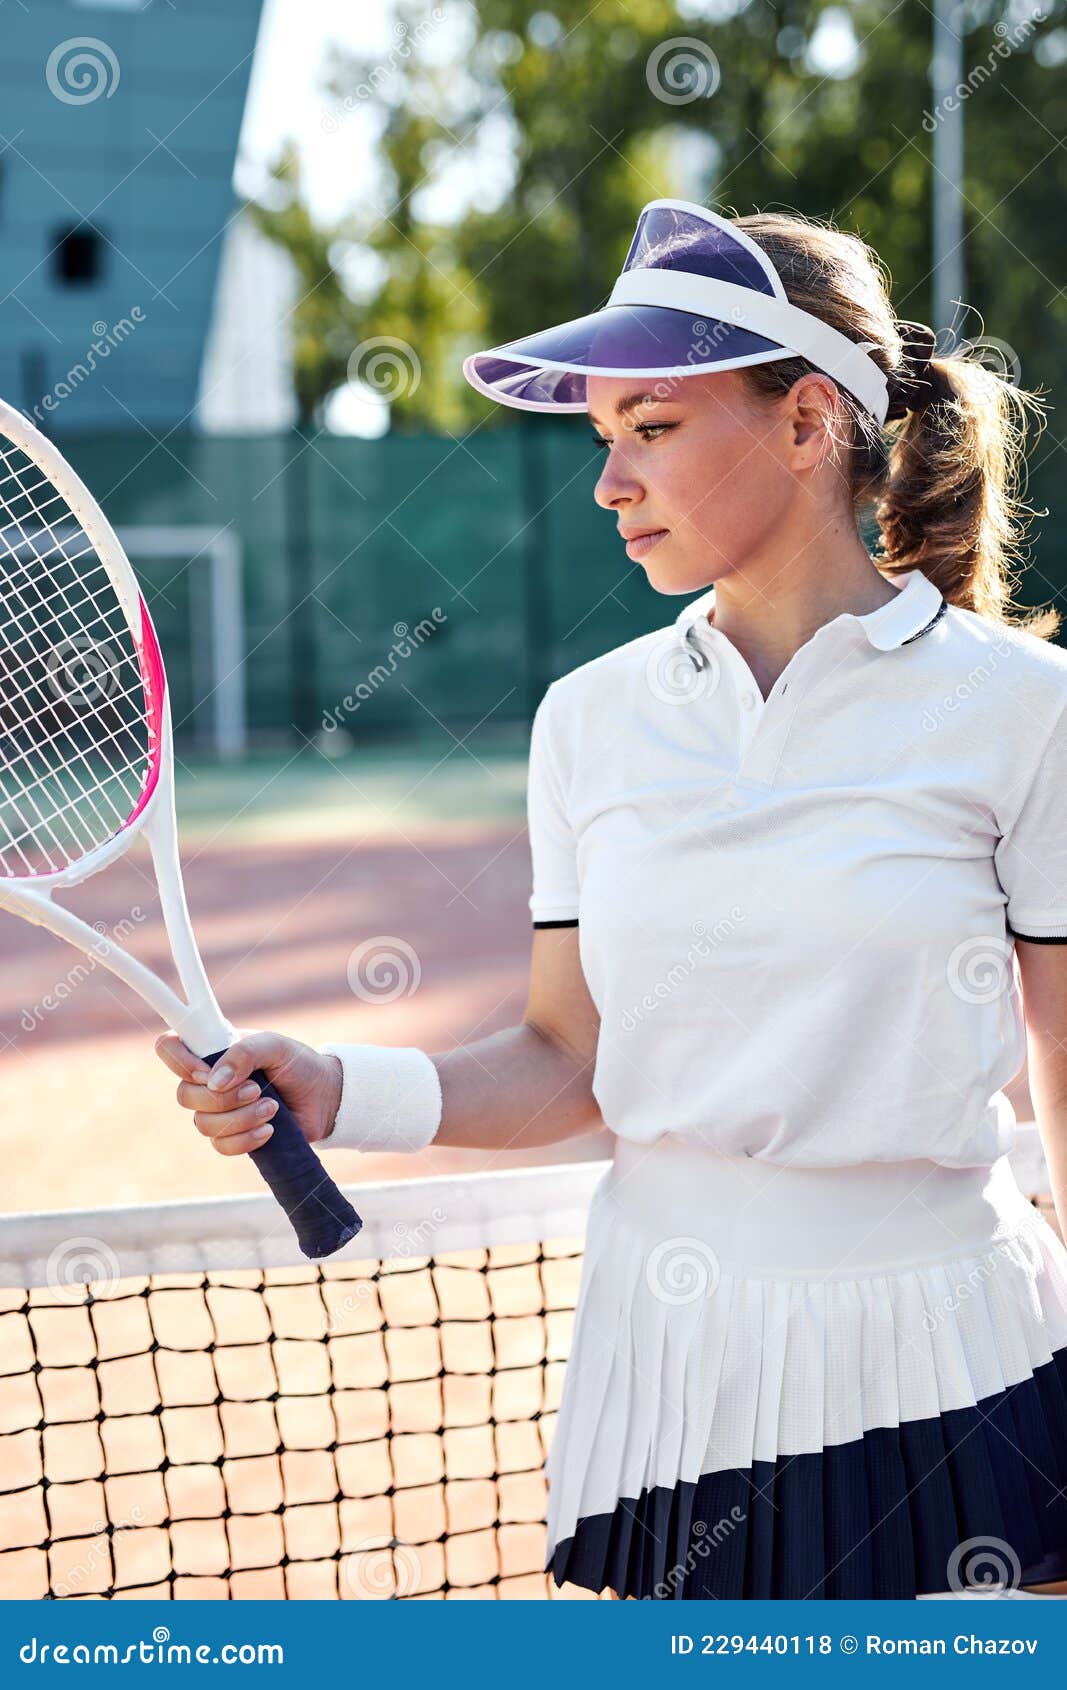 La Tenista Femenina Con Uniforme Se Está Relajando La Pista Dura Foto - Imagen de aplastar, casquillo: 229440118